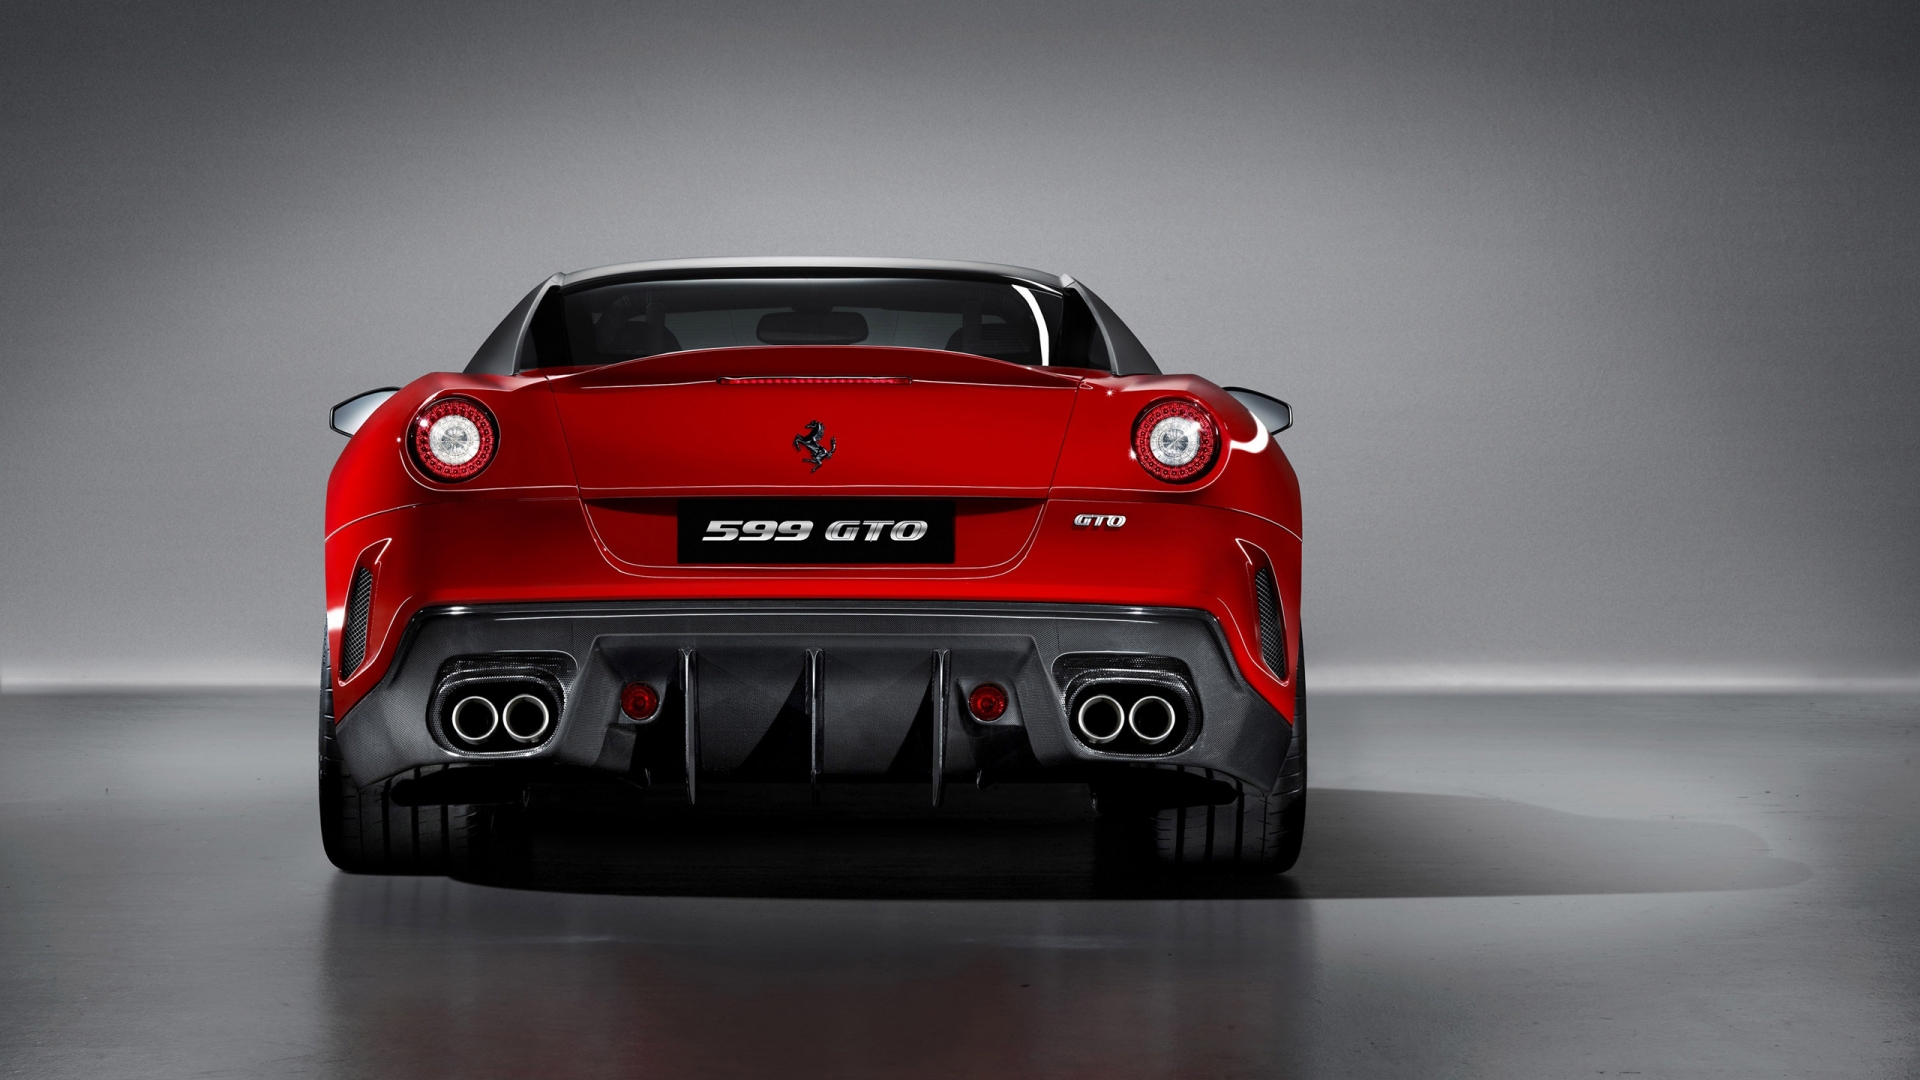 Ferrari 599 GTO Rear for 1920 x 1080 HDTV 1080p resolution